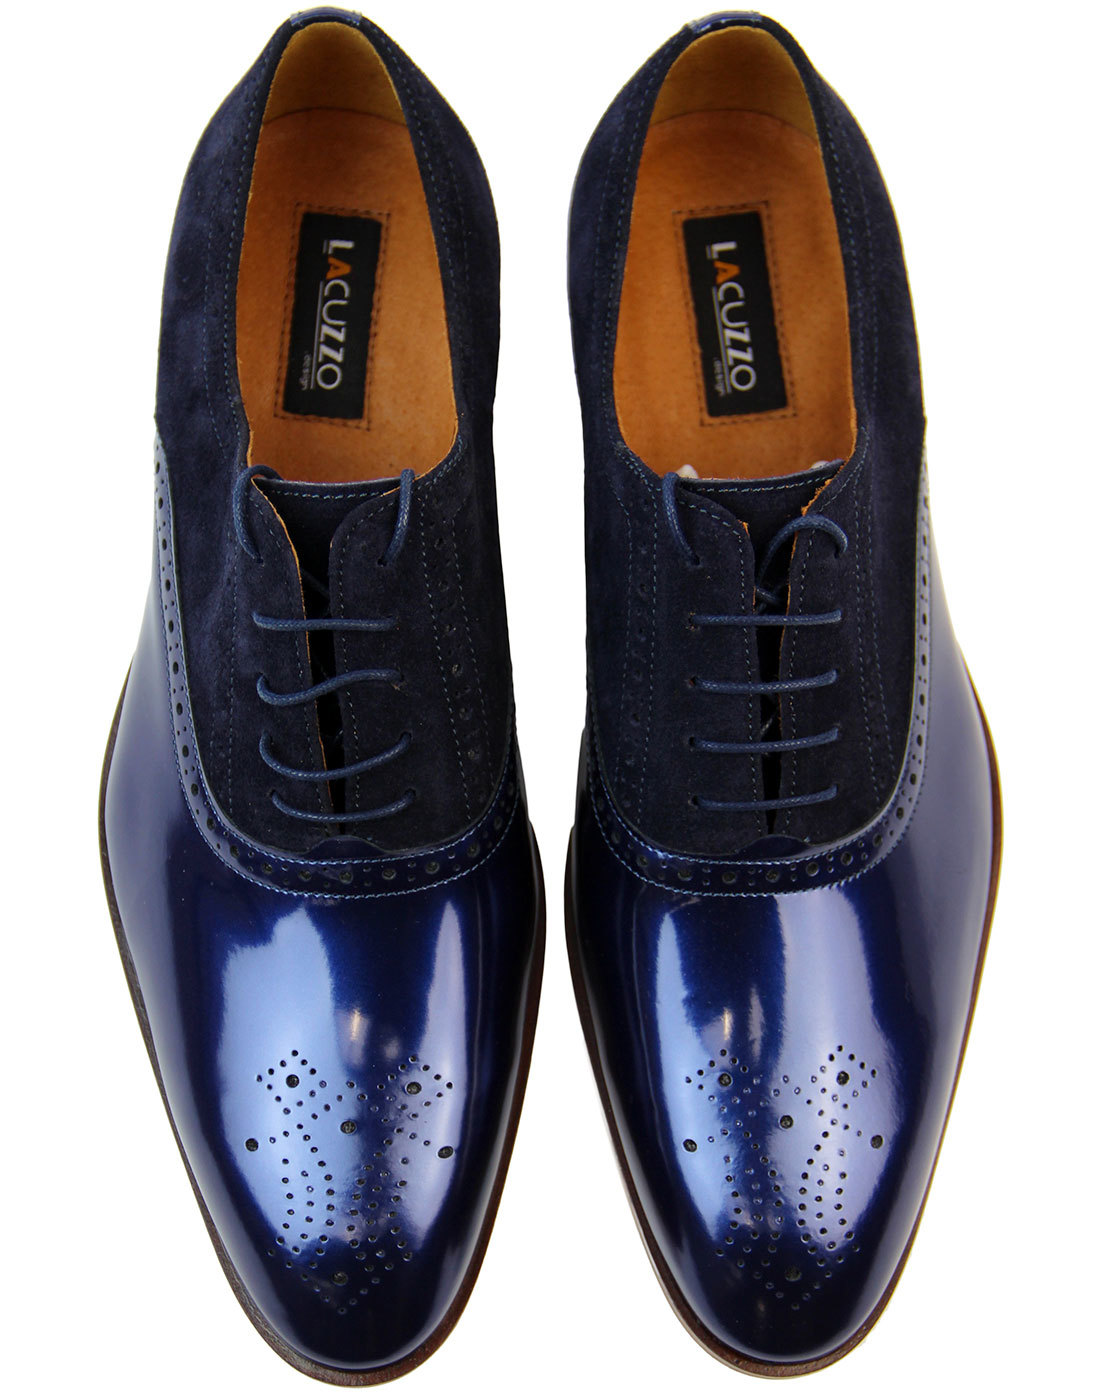 LACUZZO Retro 1970s Metallic Blue Suede Saddle Oxford Shoes